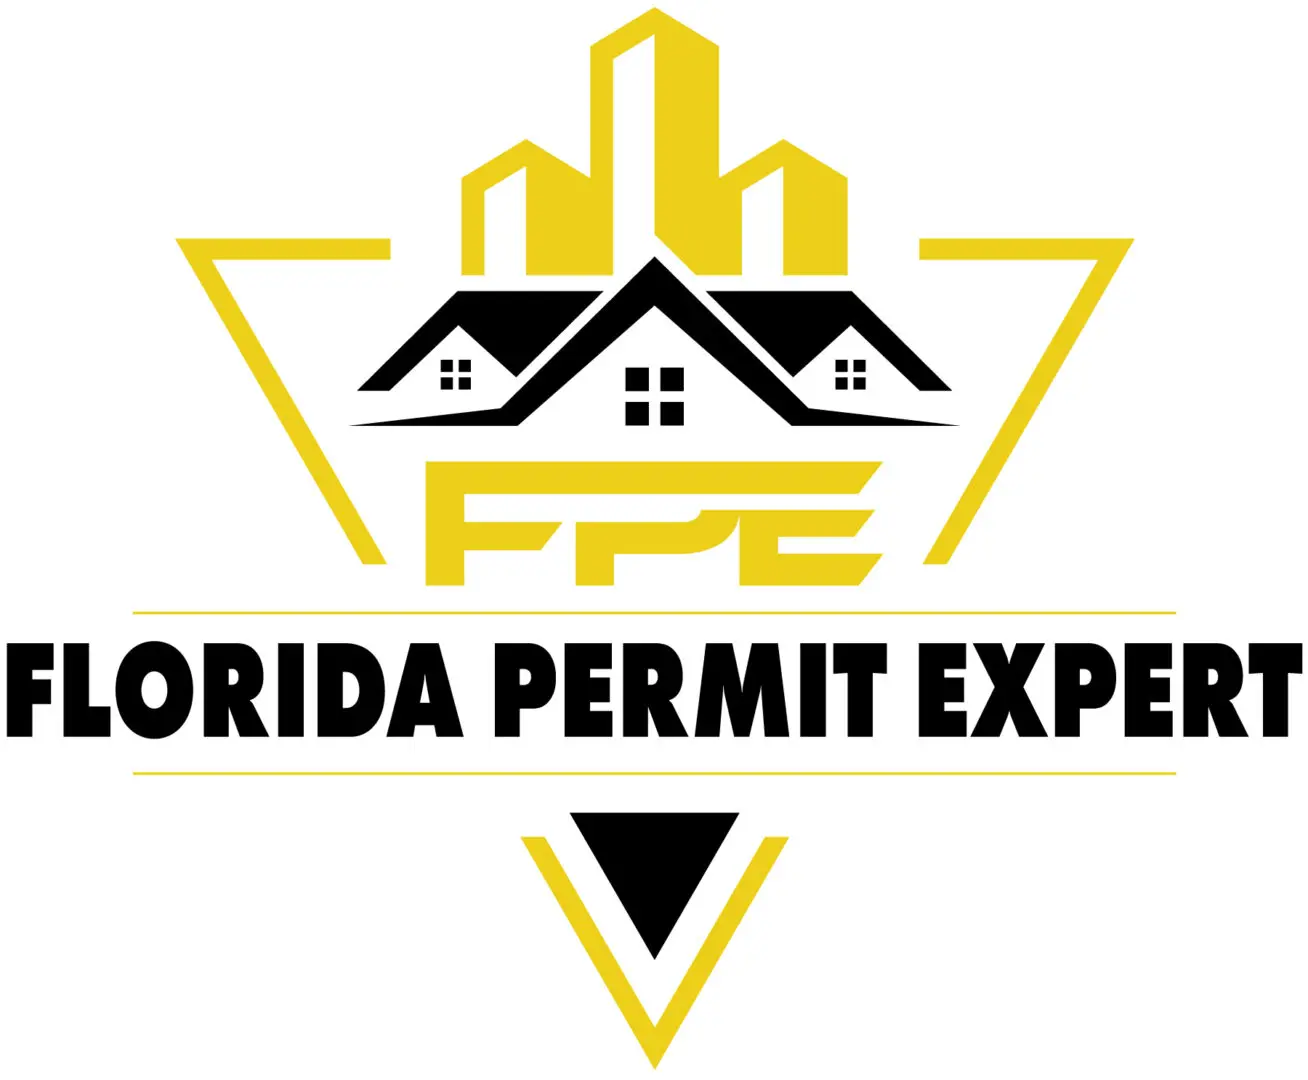 CX-110685_Florida Permit Expert_Final